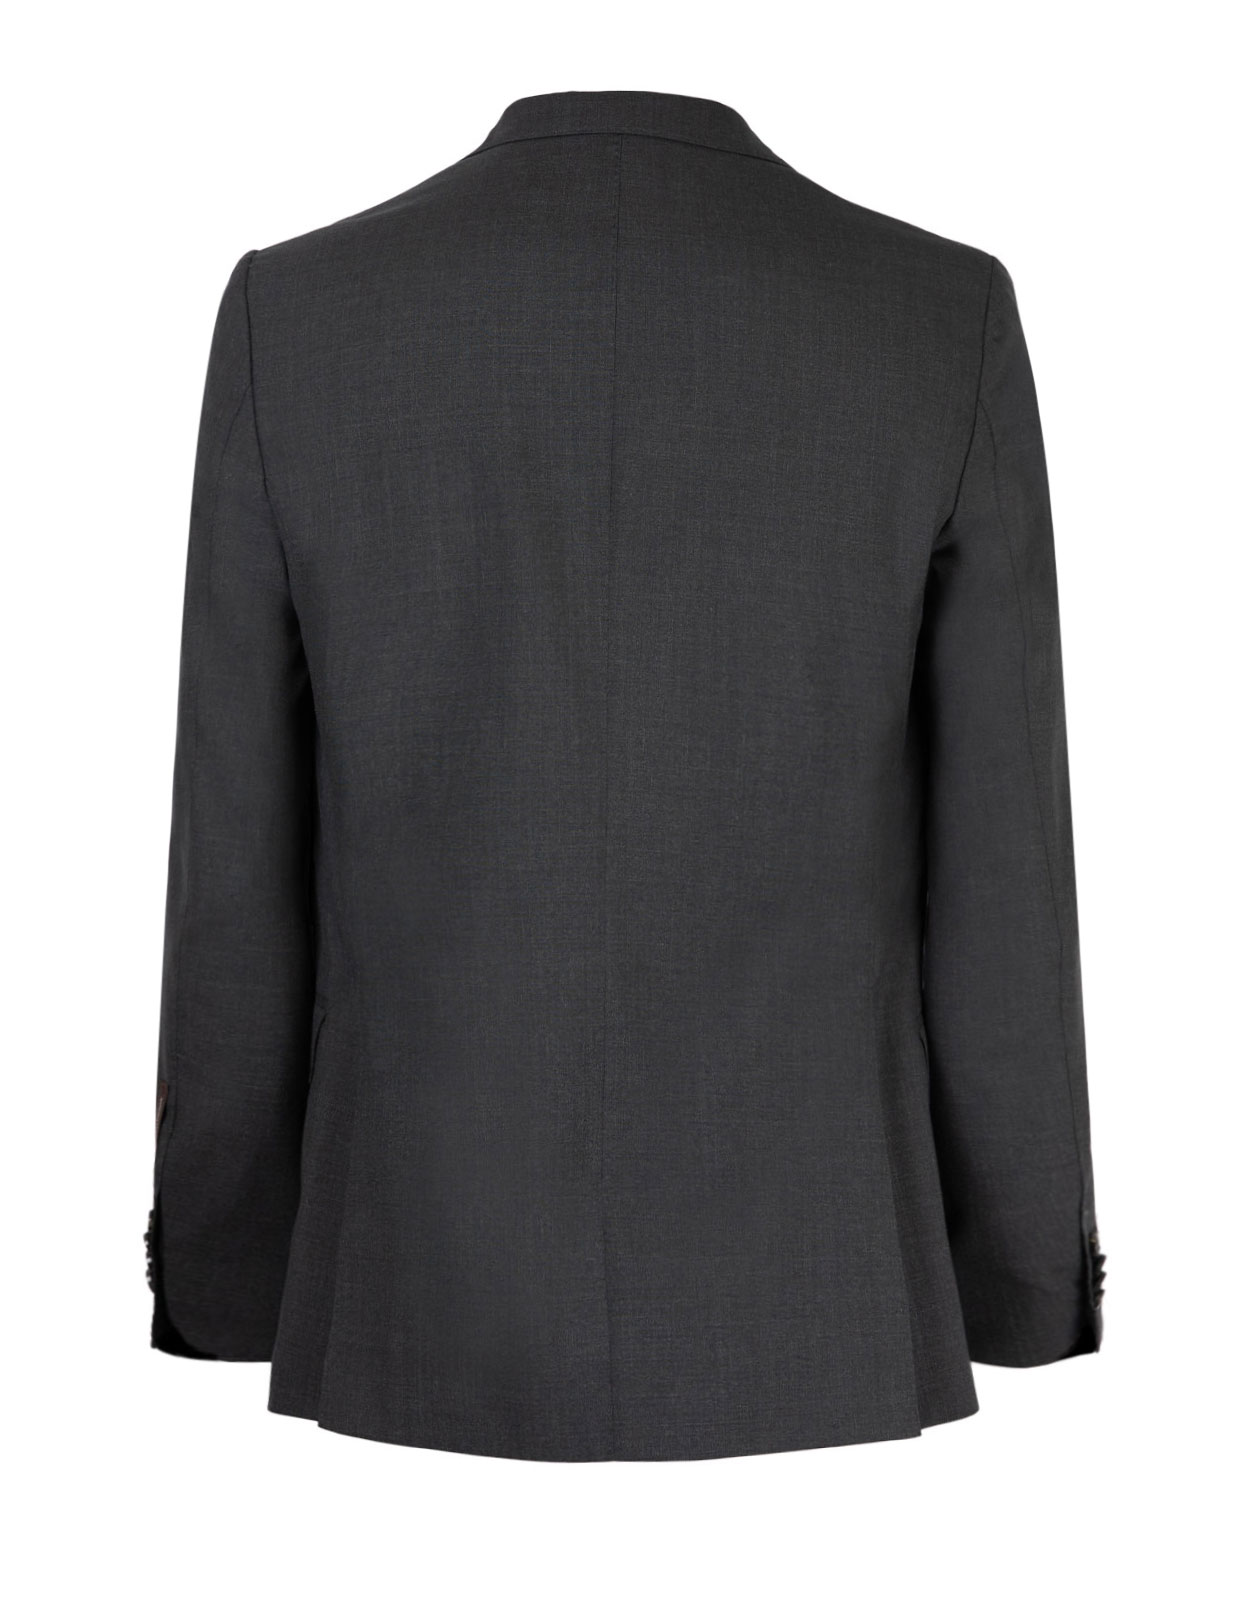 Falk Suit Jacket Regular Fit Mix & Match Wool Dark Grey Stl 100